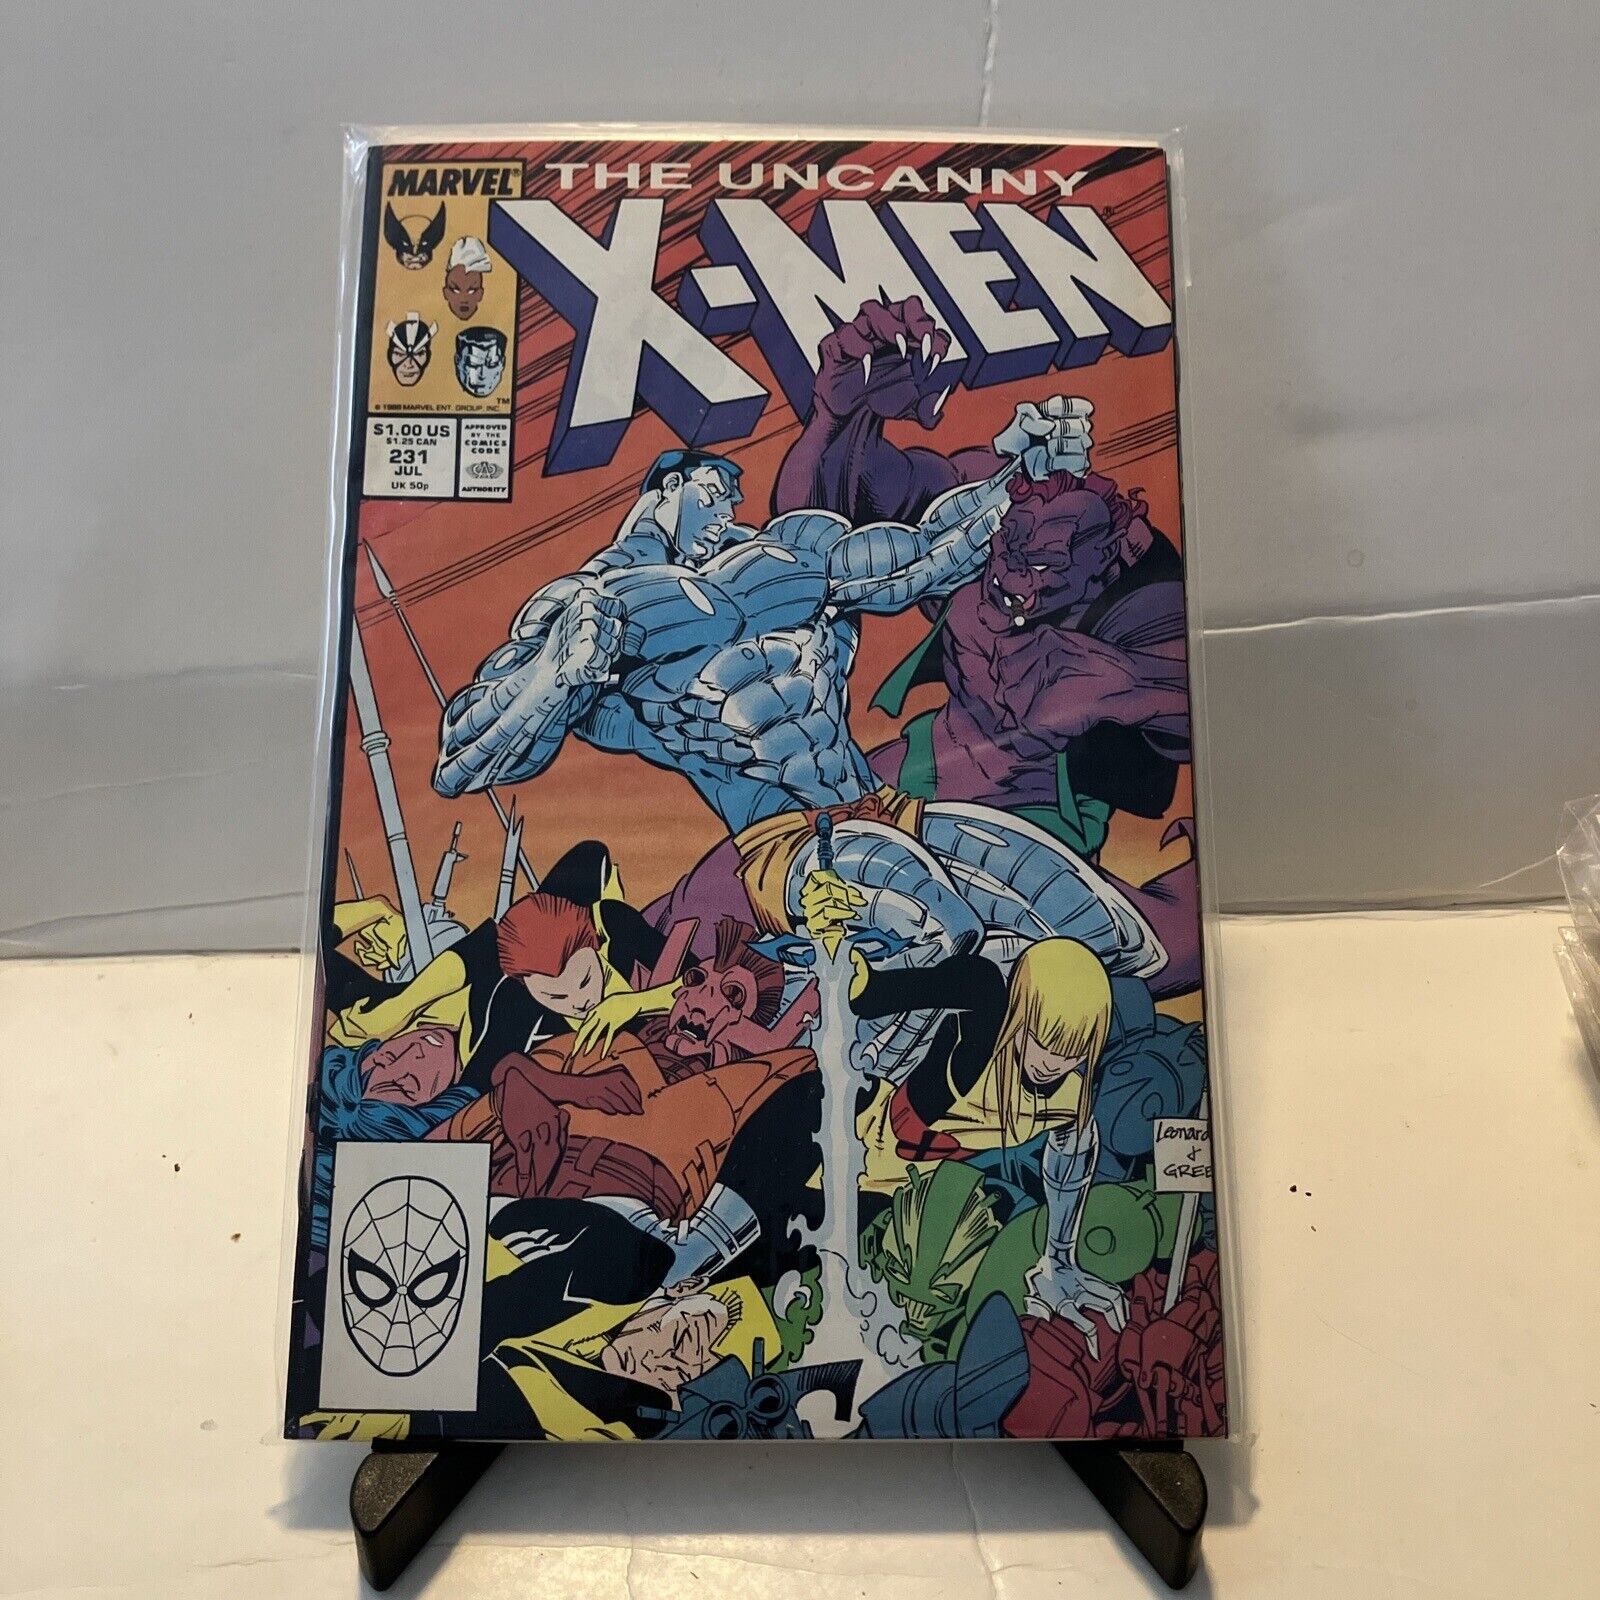 The Uncanny X-Men #231 (Marvel, July 1988)